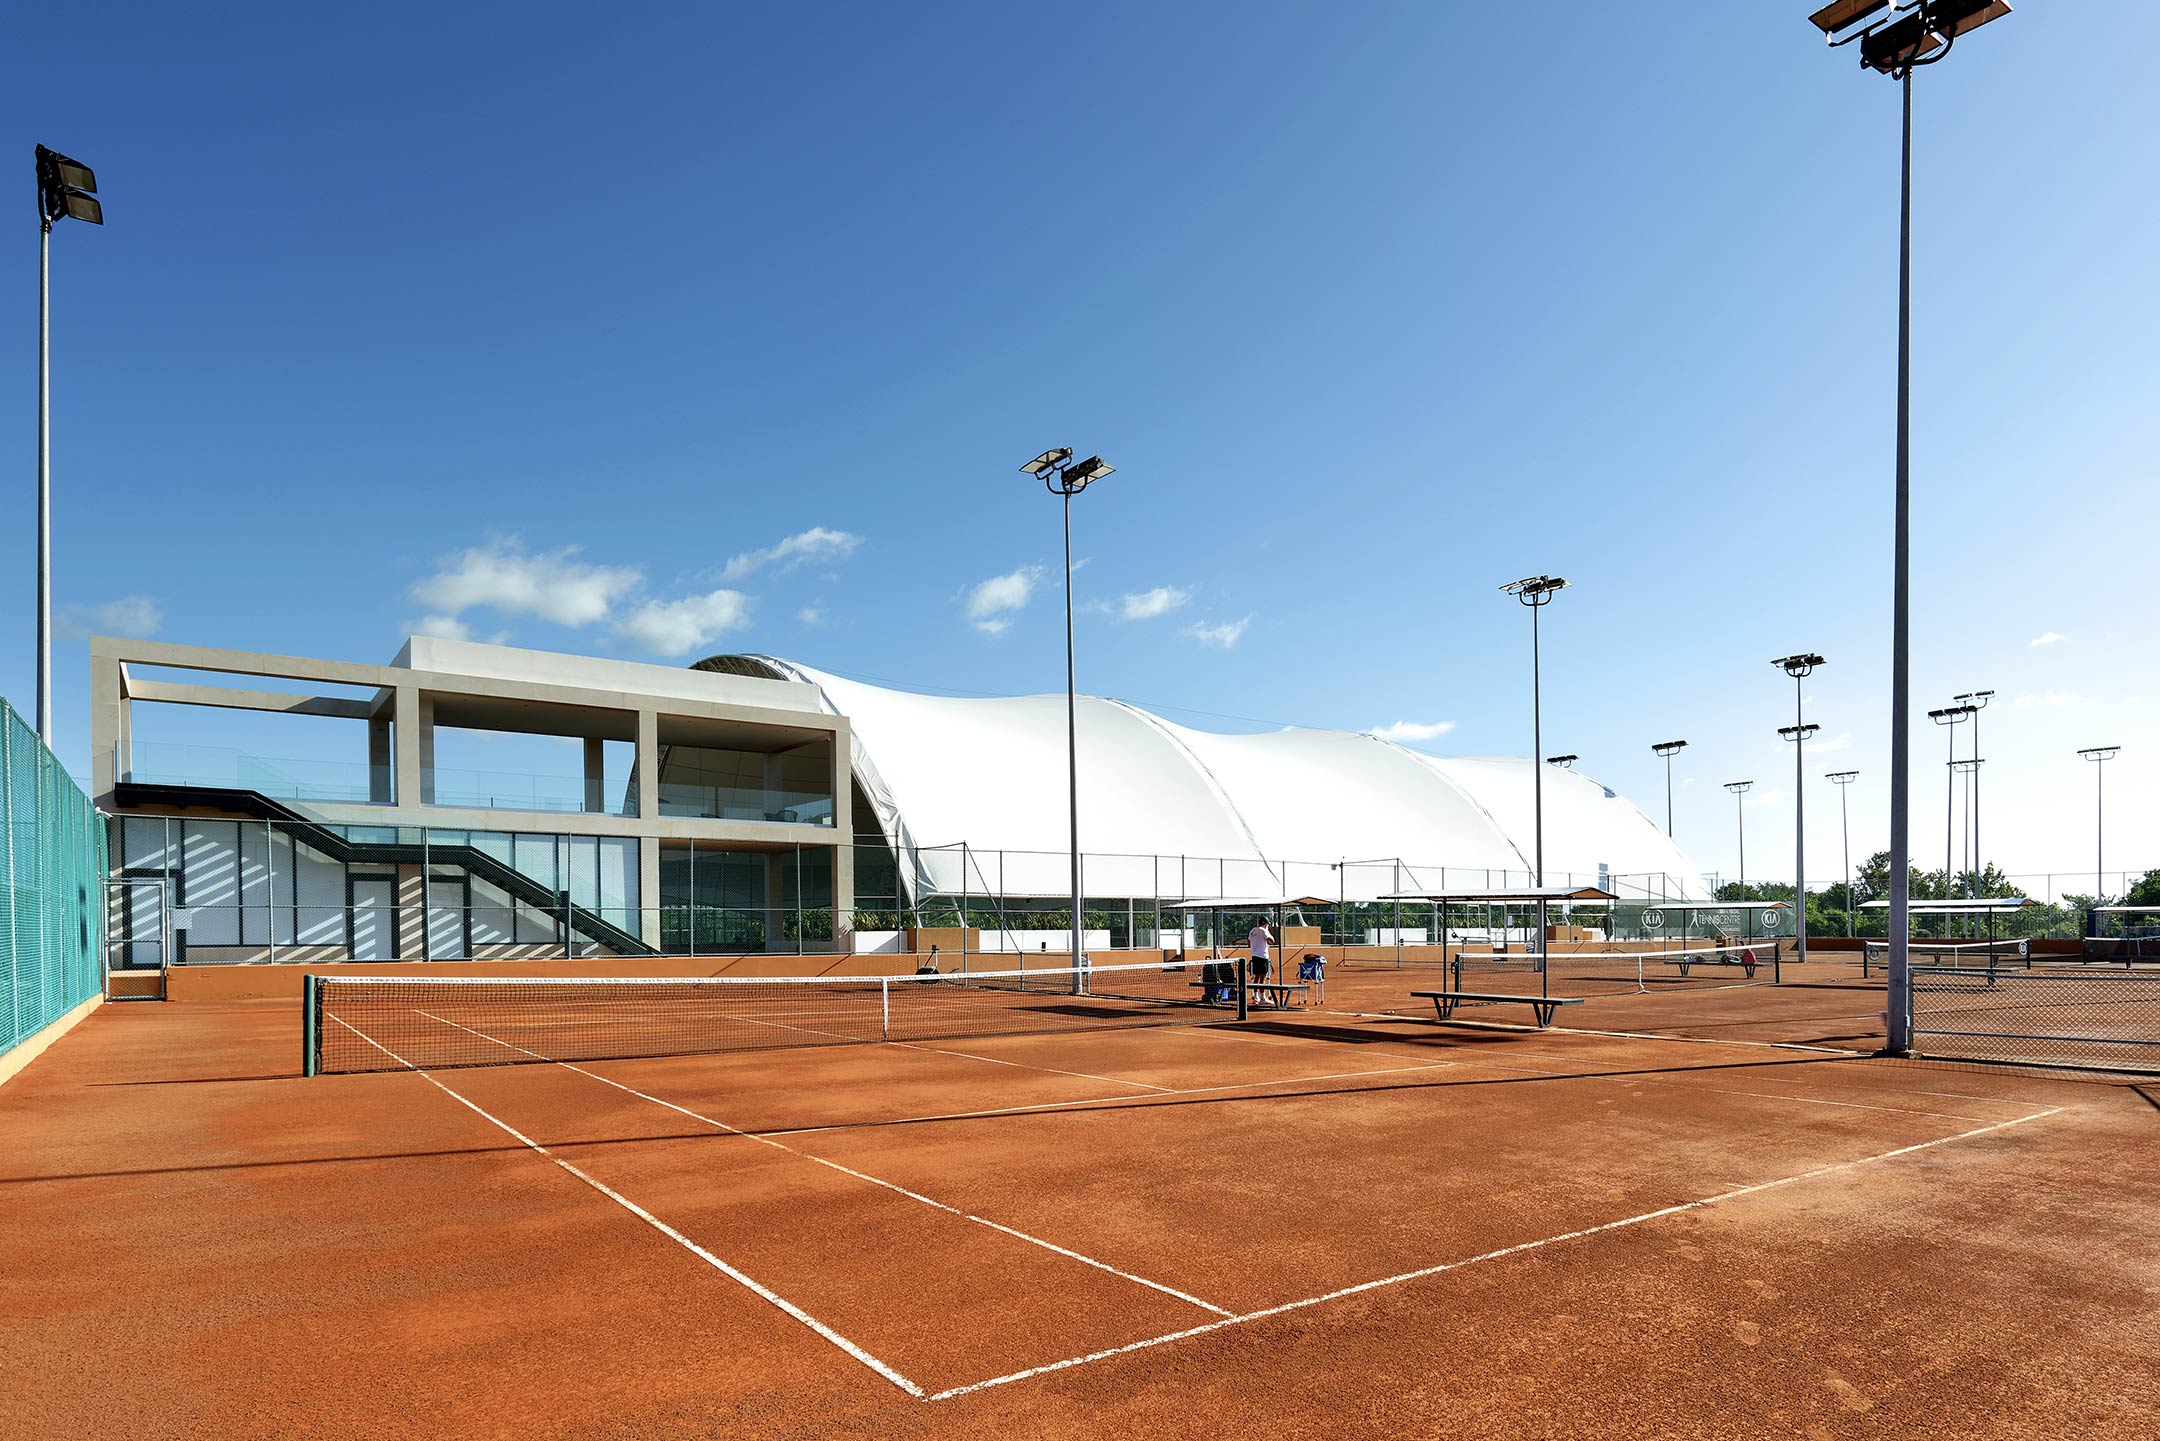 Rafa Nadal Tennis Centre Costa Mujeres